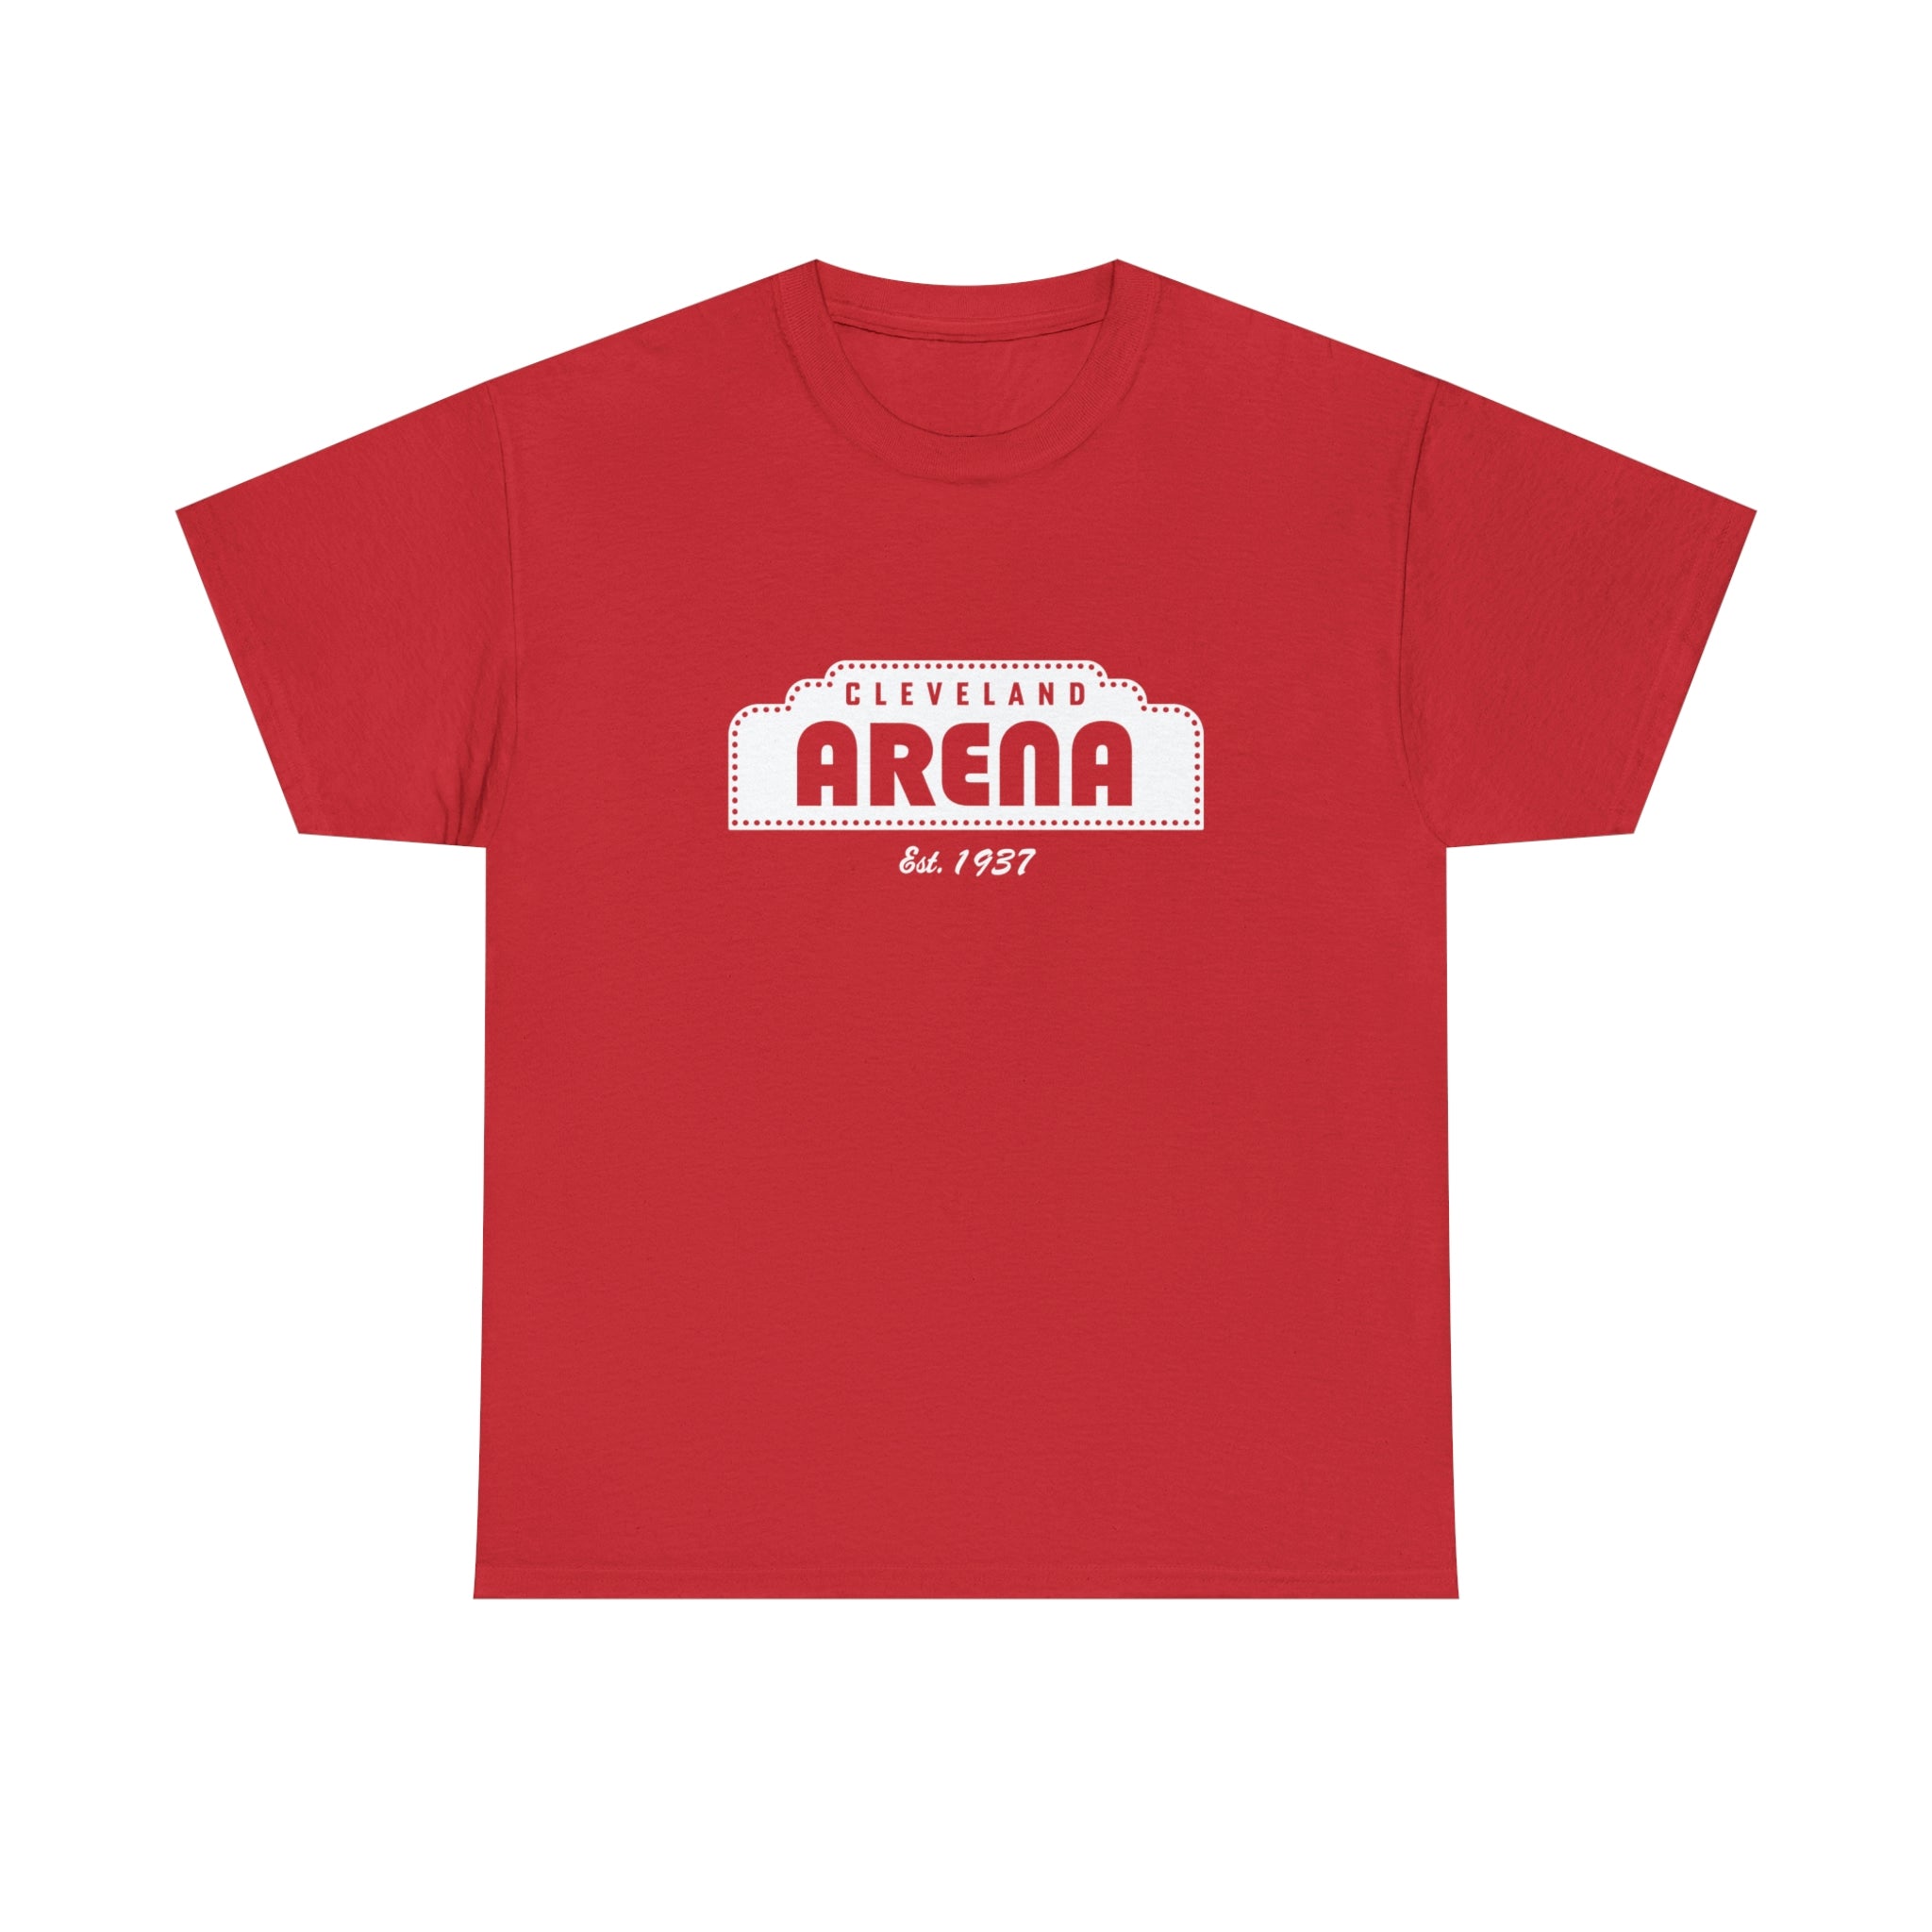 Cleveland Arena T-Shirt